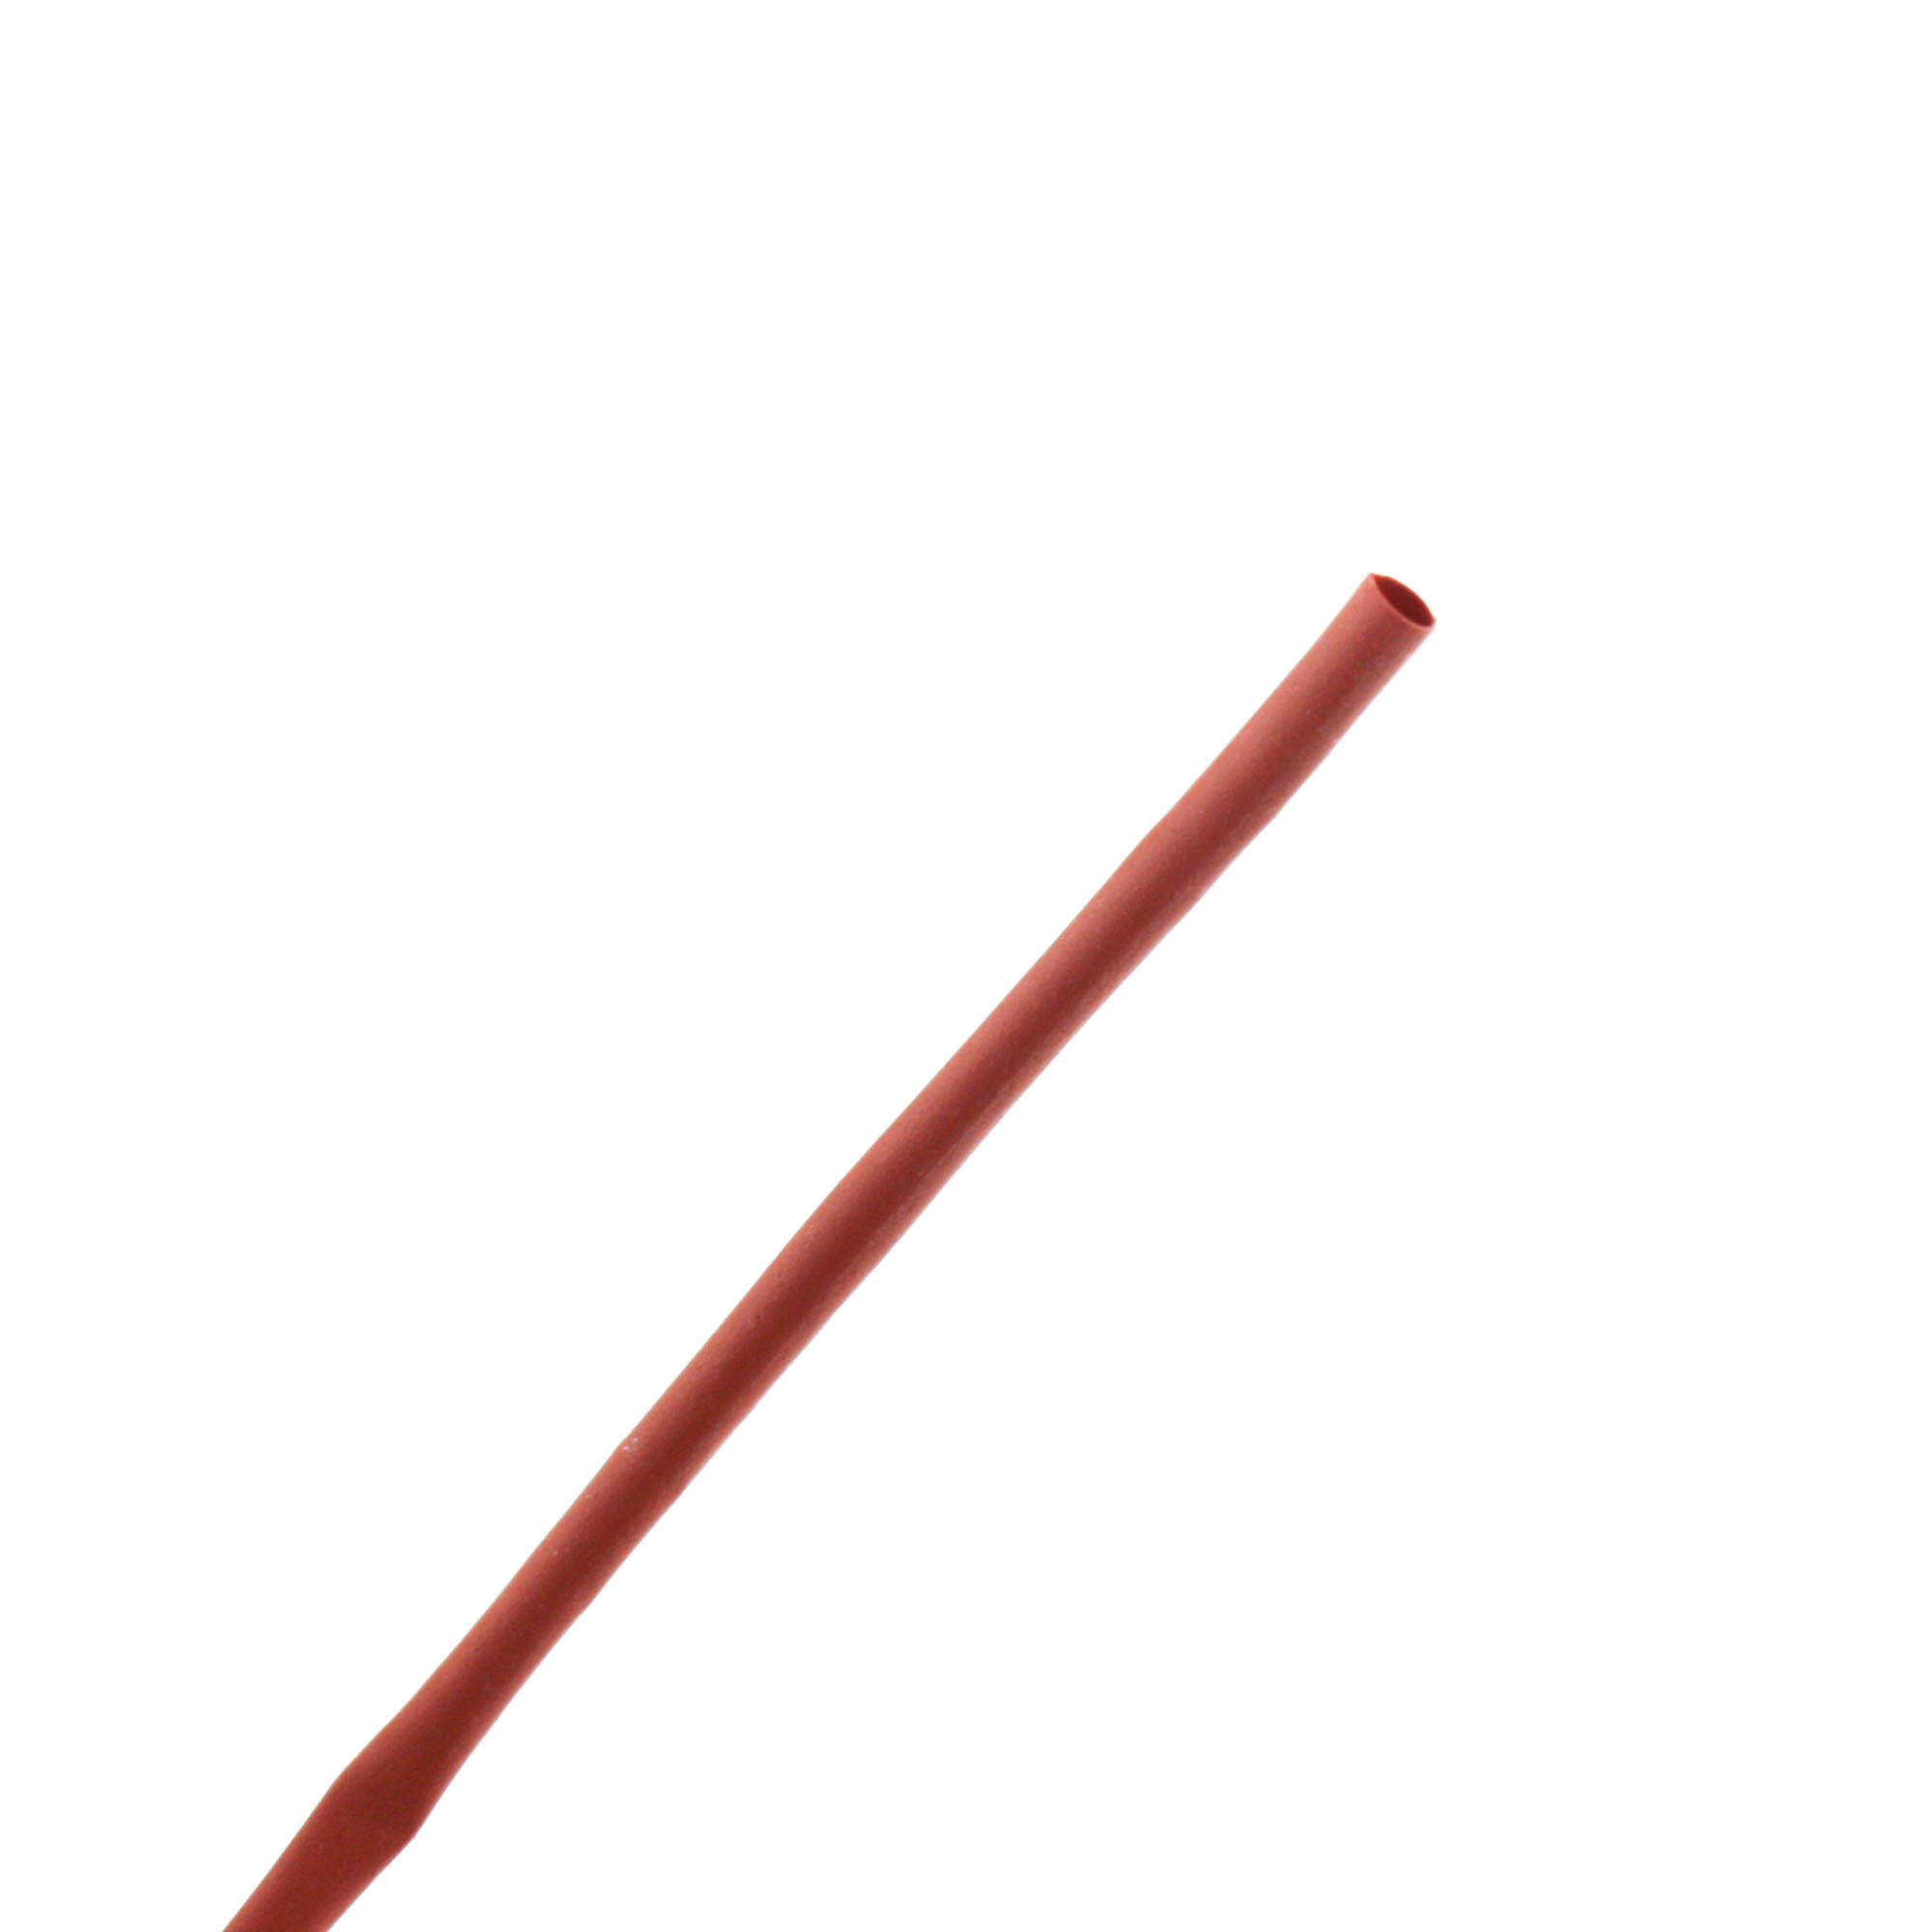 Heat shrink tube 2:1 / 1,6-0,8mm, 12m, red